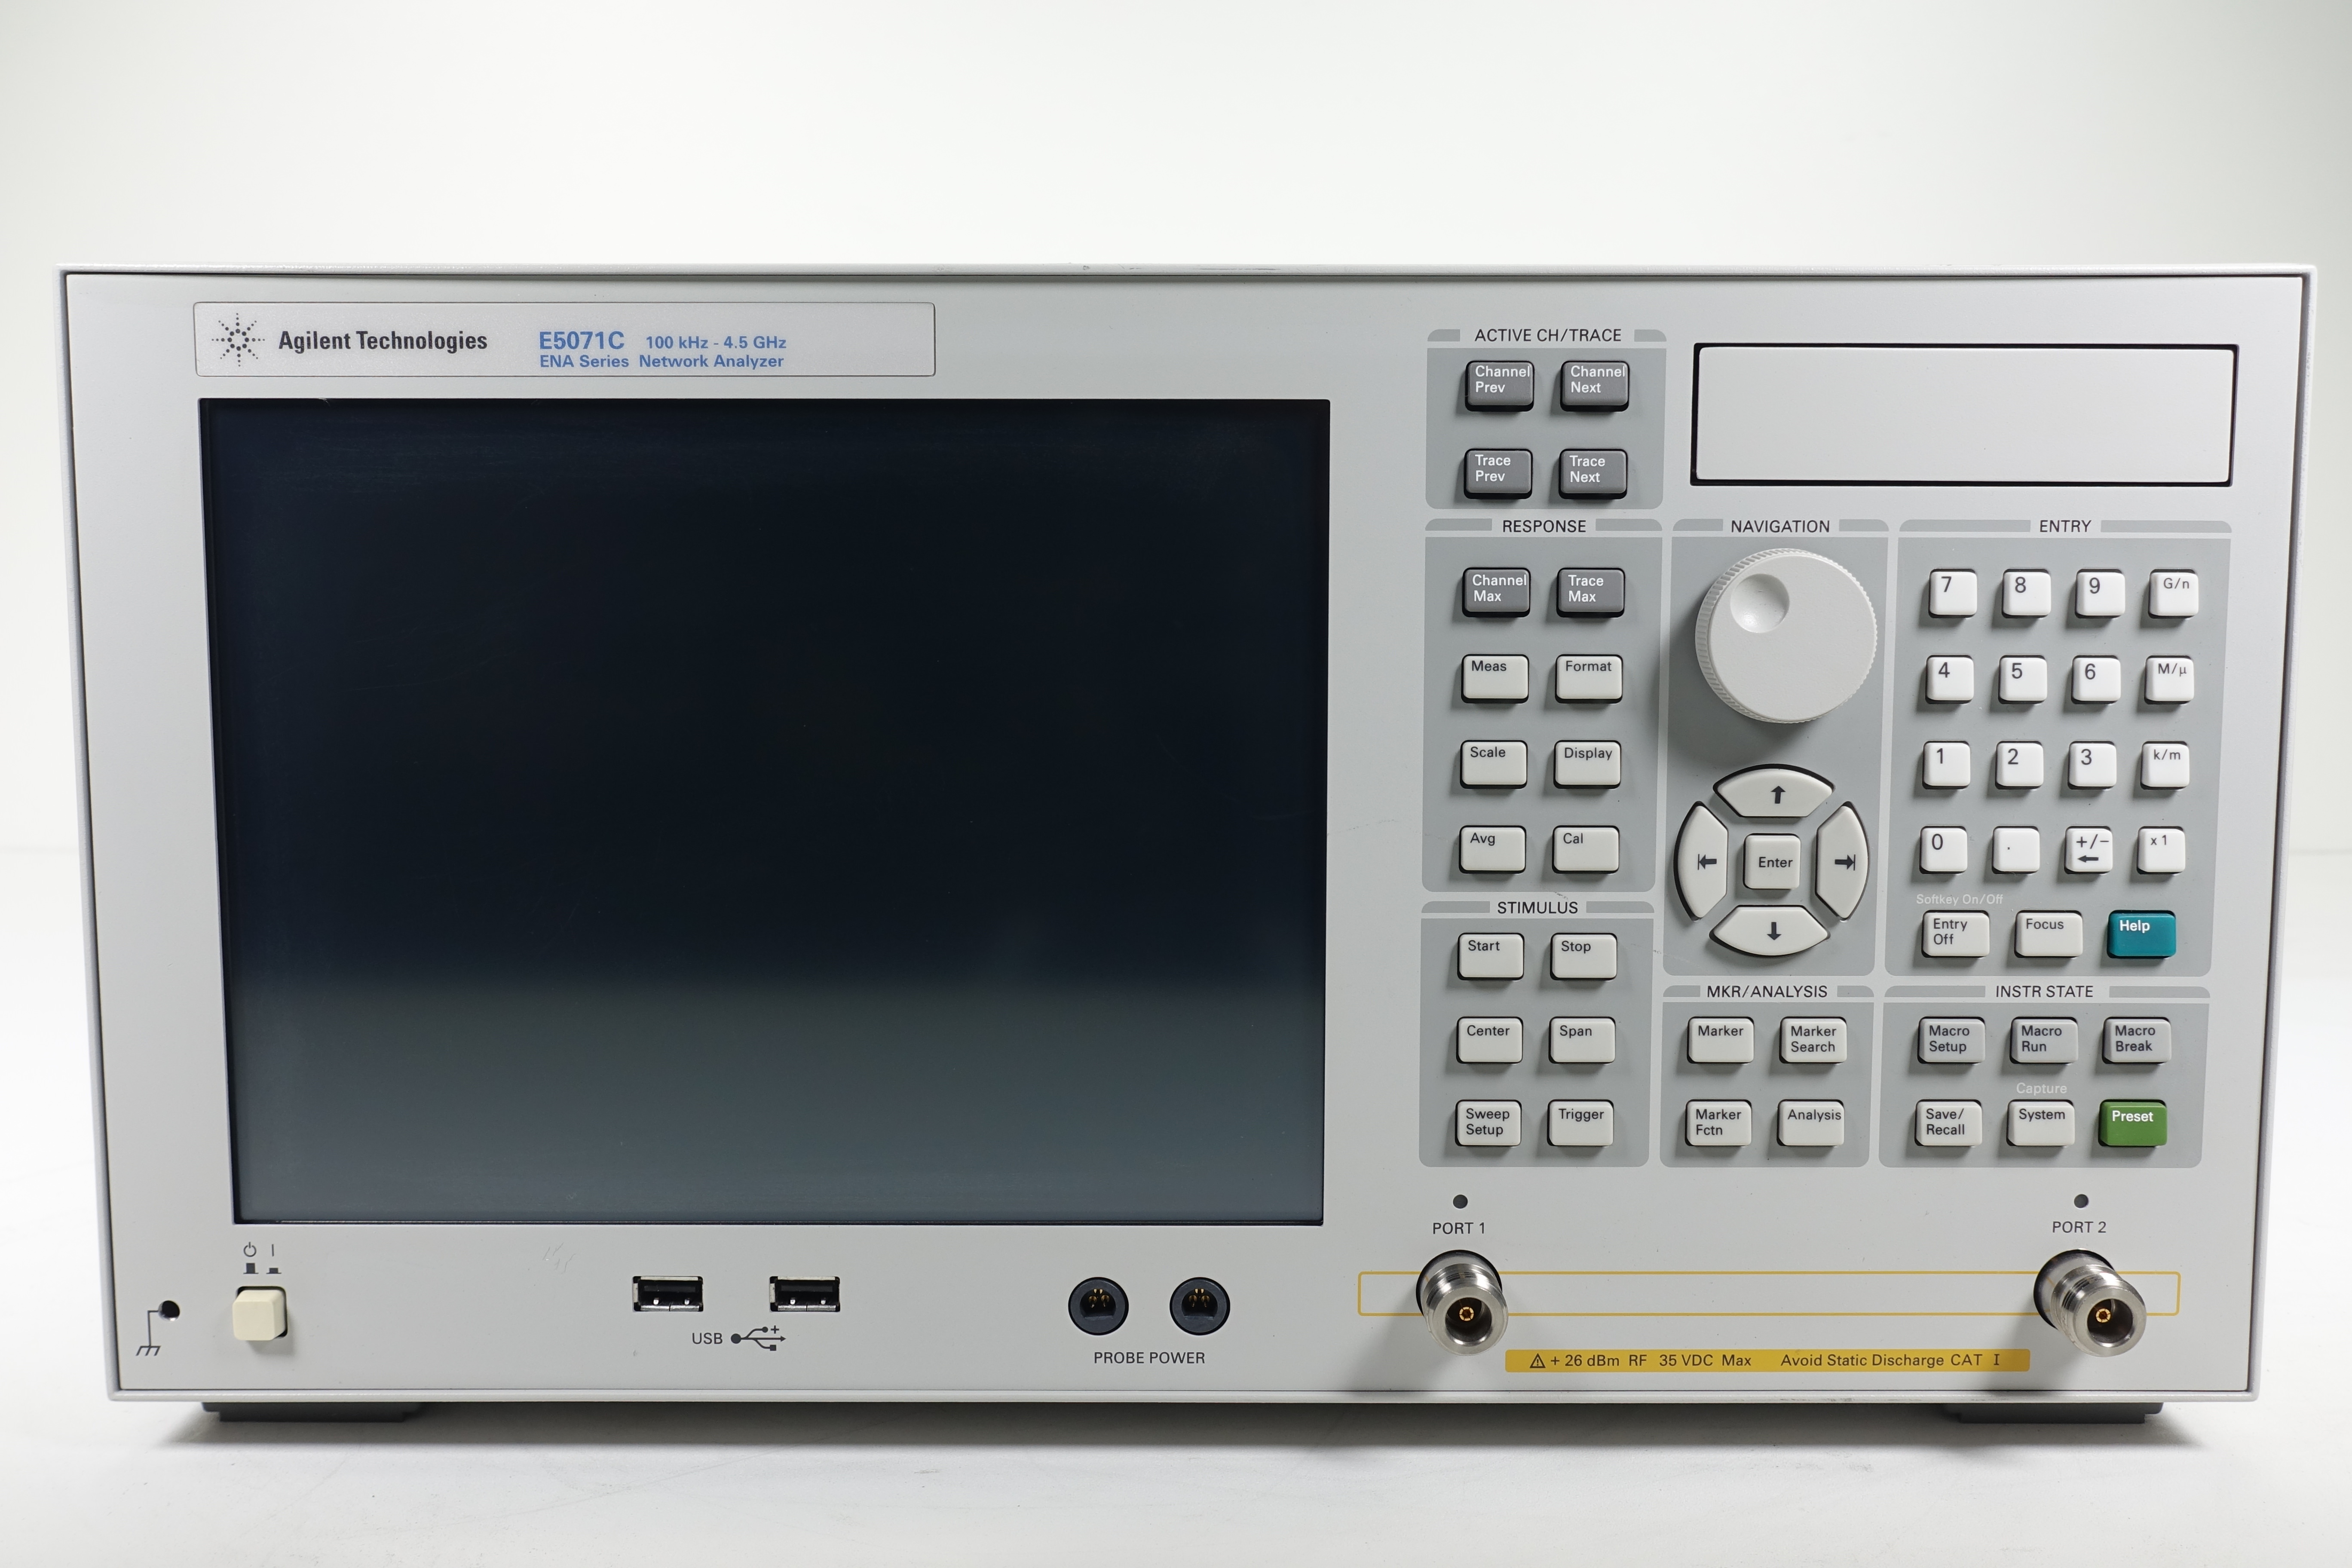 Keysight E5071C-245 2-port Test Set / 100 kHz to 4.5 GHz / With Bias Tees